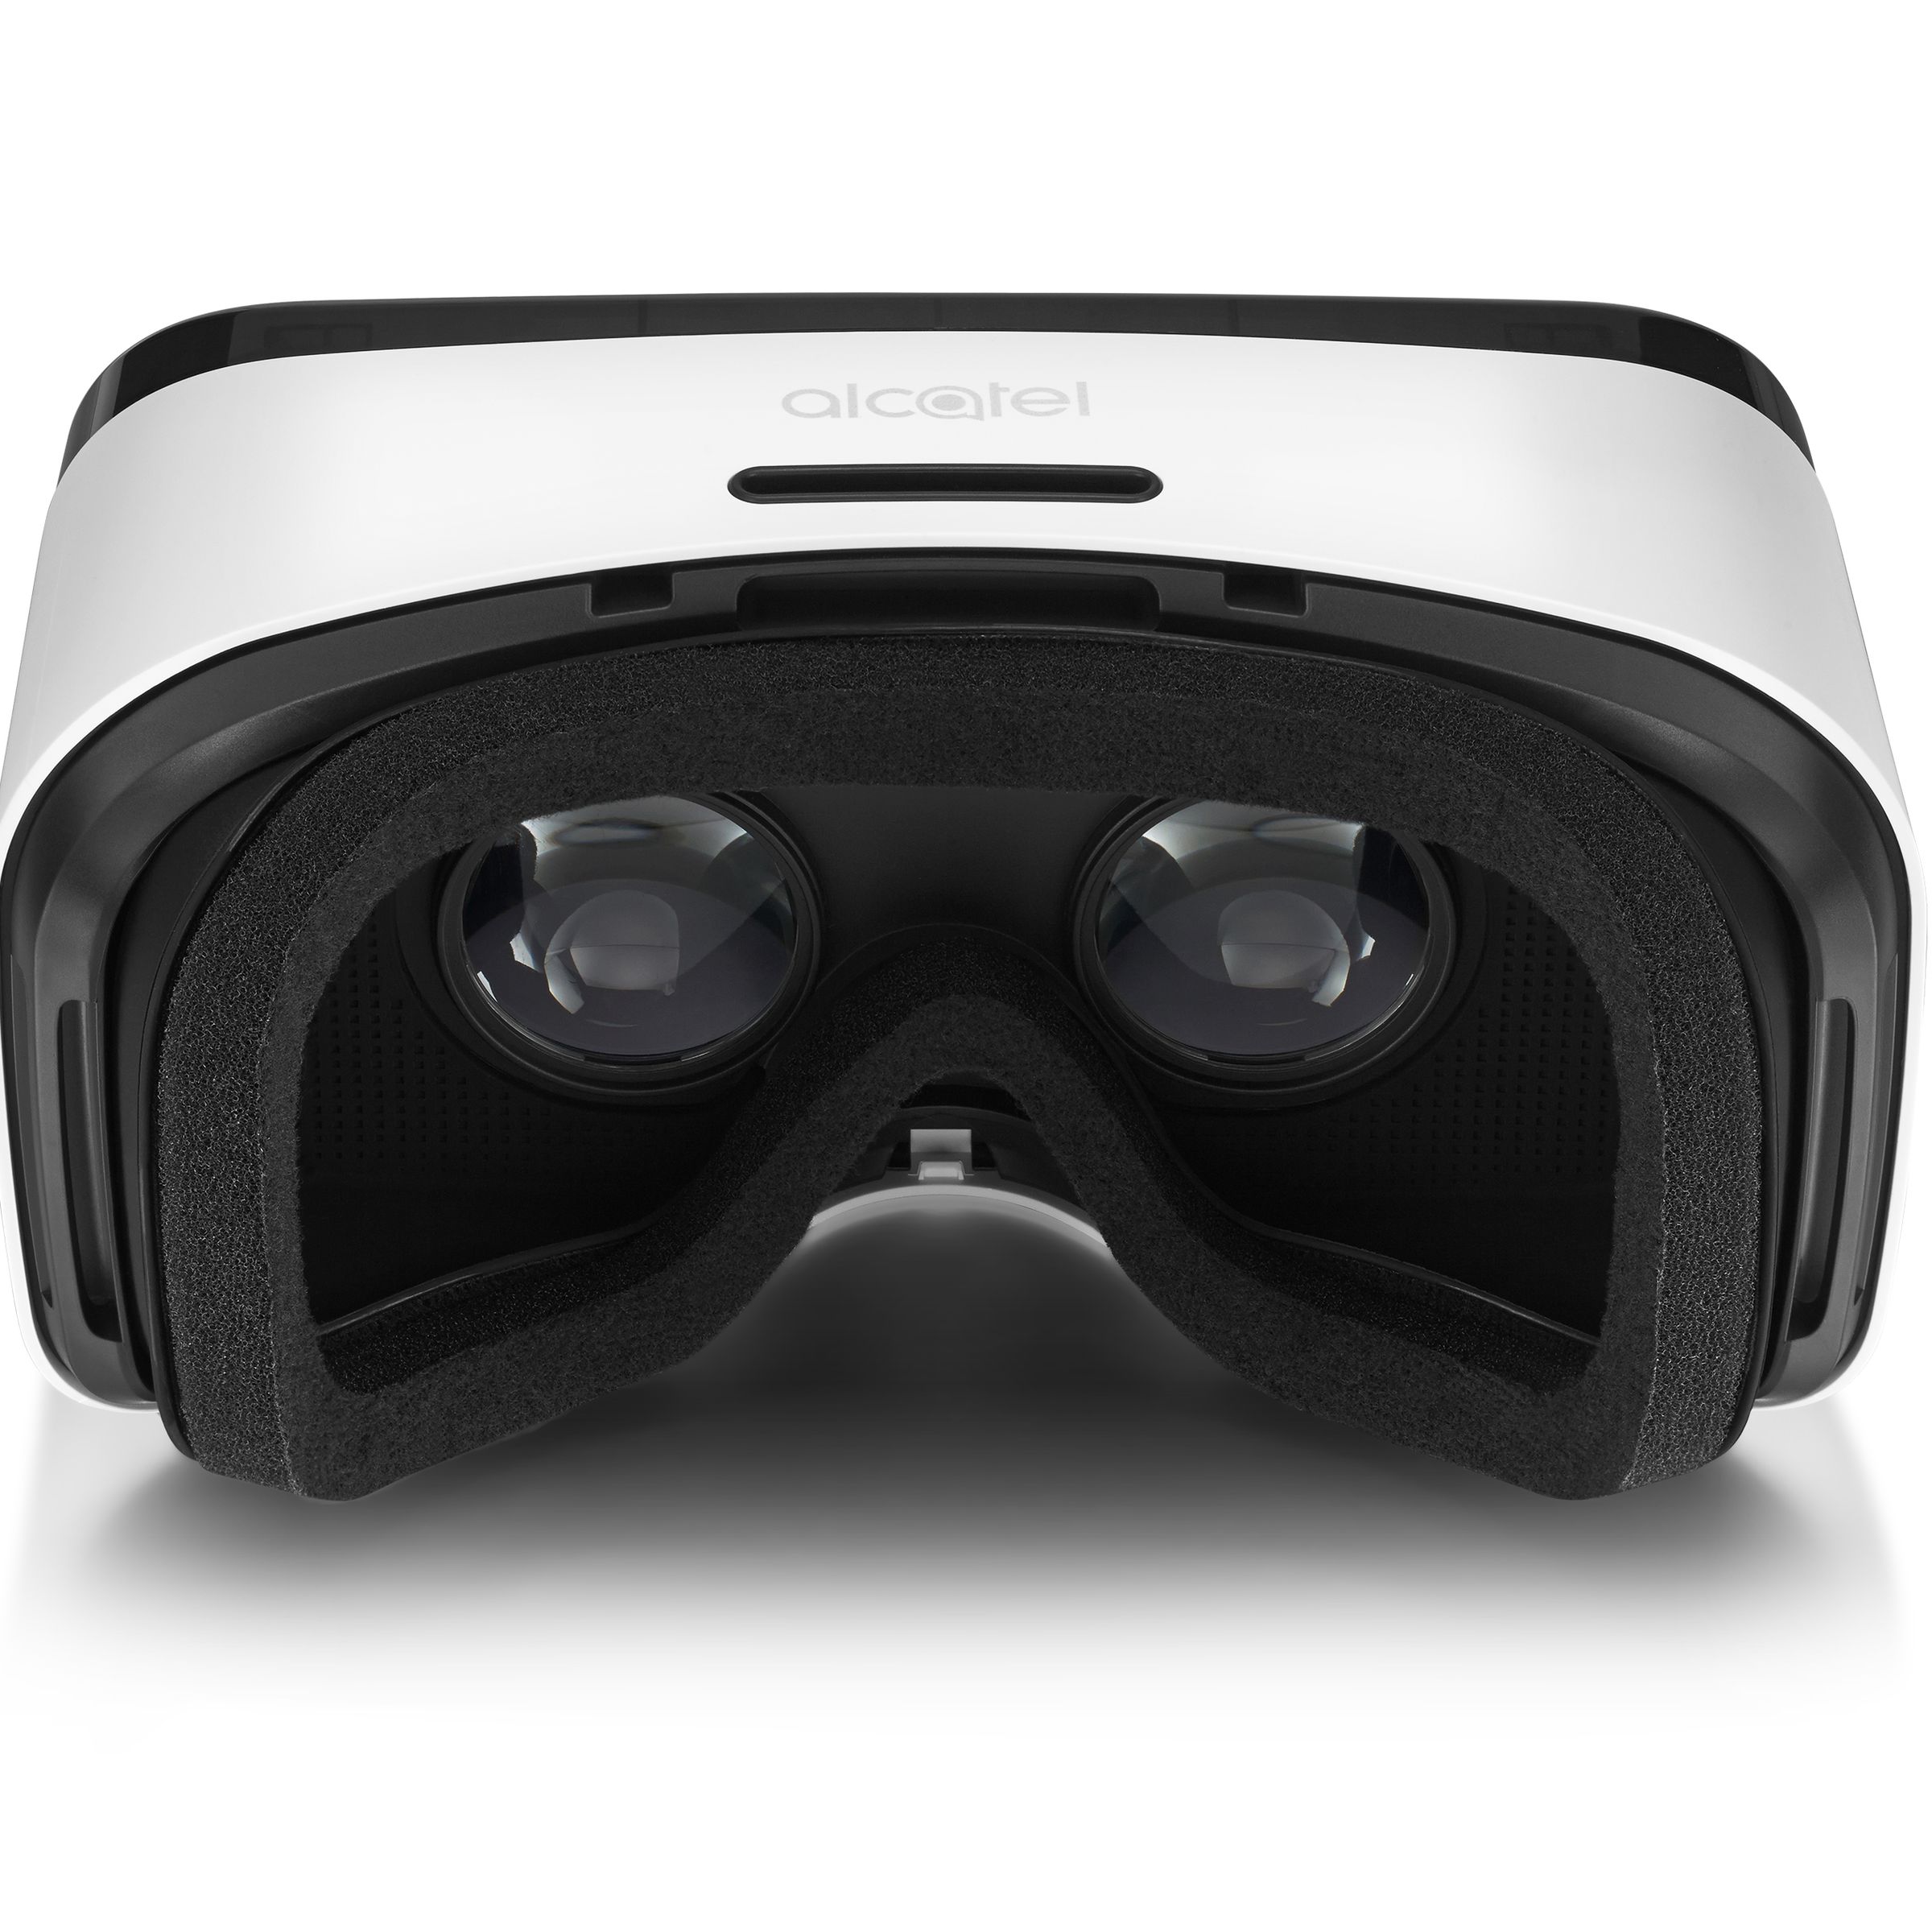 Alcatel VR headset